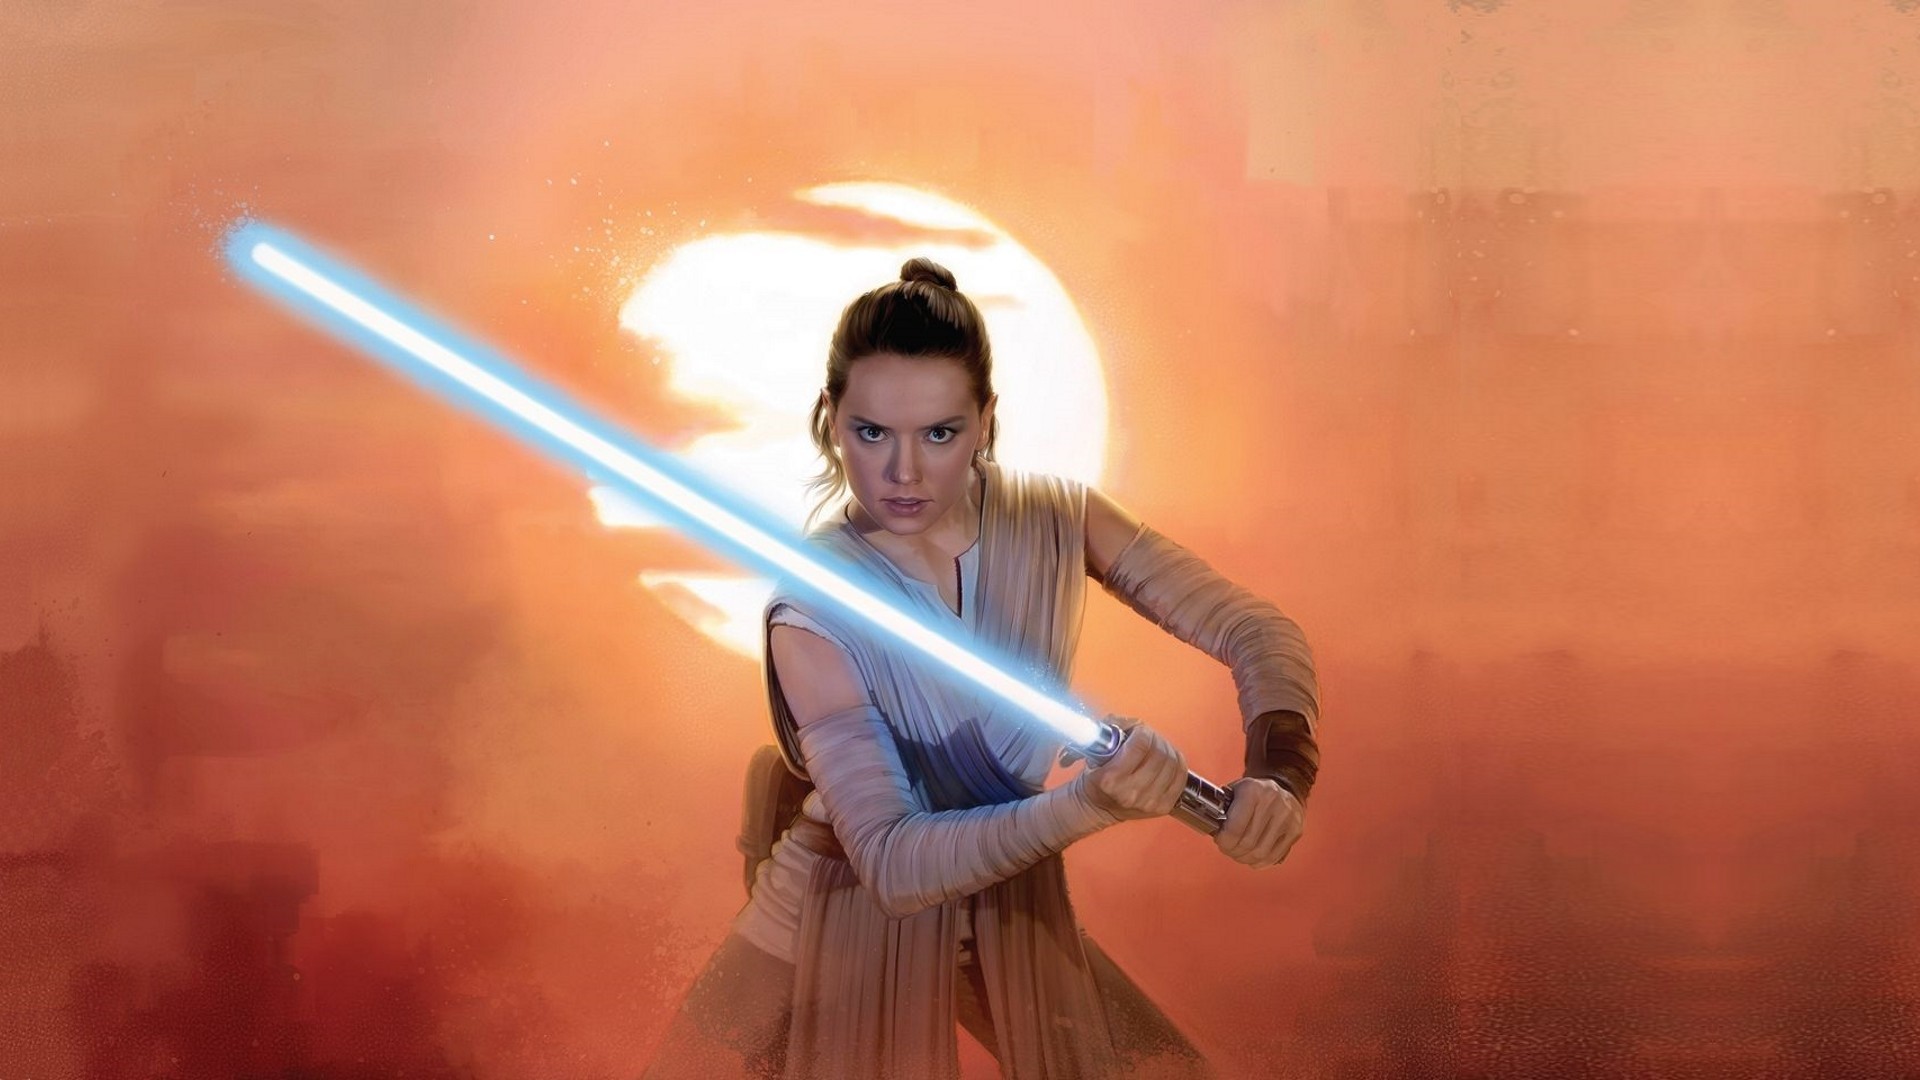 People Star Wars lightsaber Jedi Daisy Ridley Rey from Star Wars